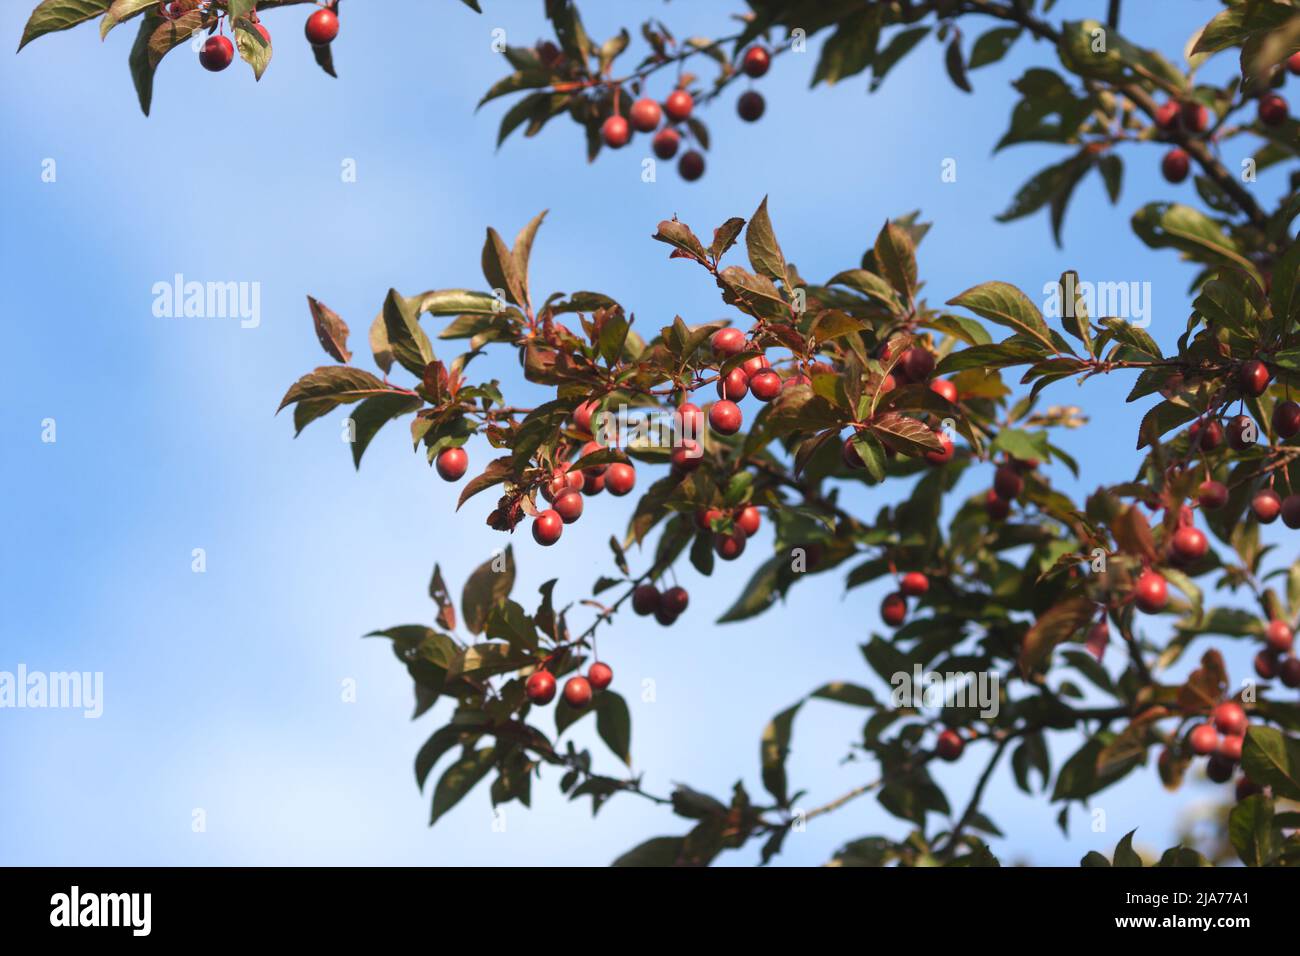 Cherry plum tree, prunus cerasifera, growing in a garden, Szigethalom, Hungary Stock Photo